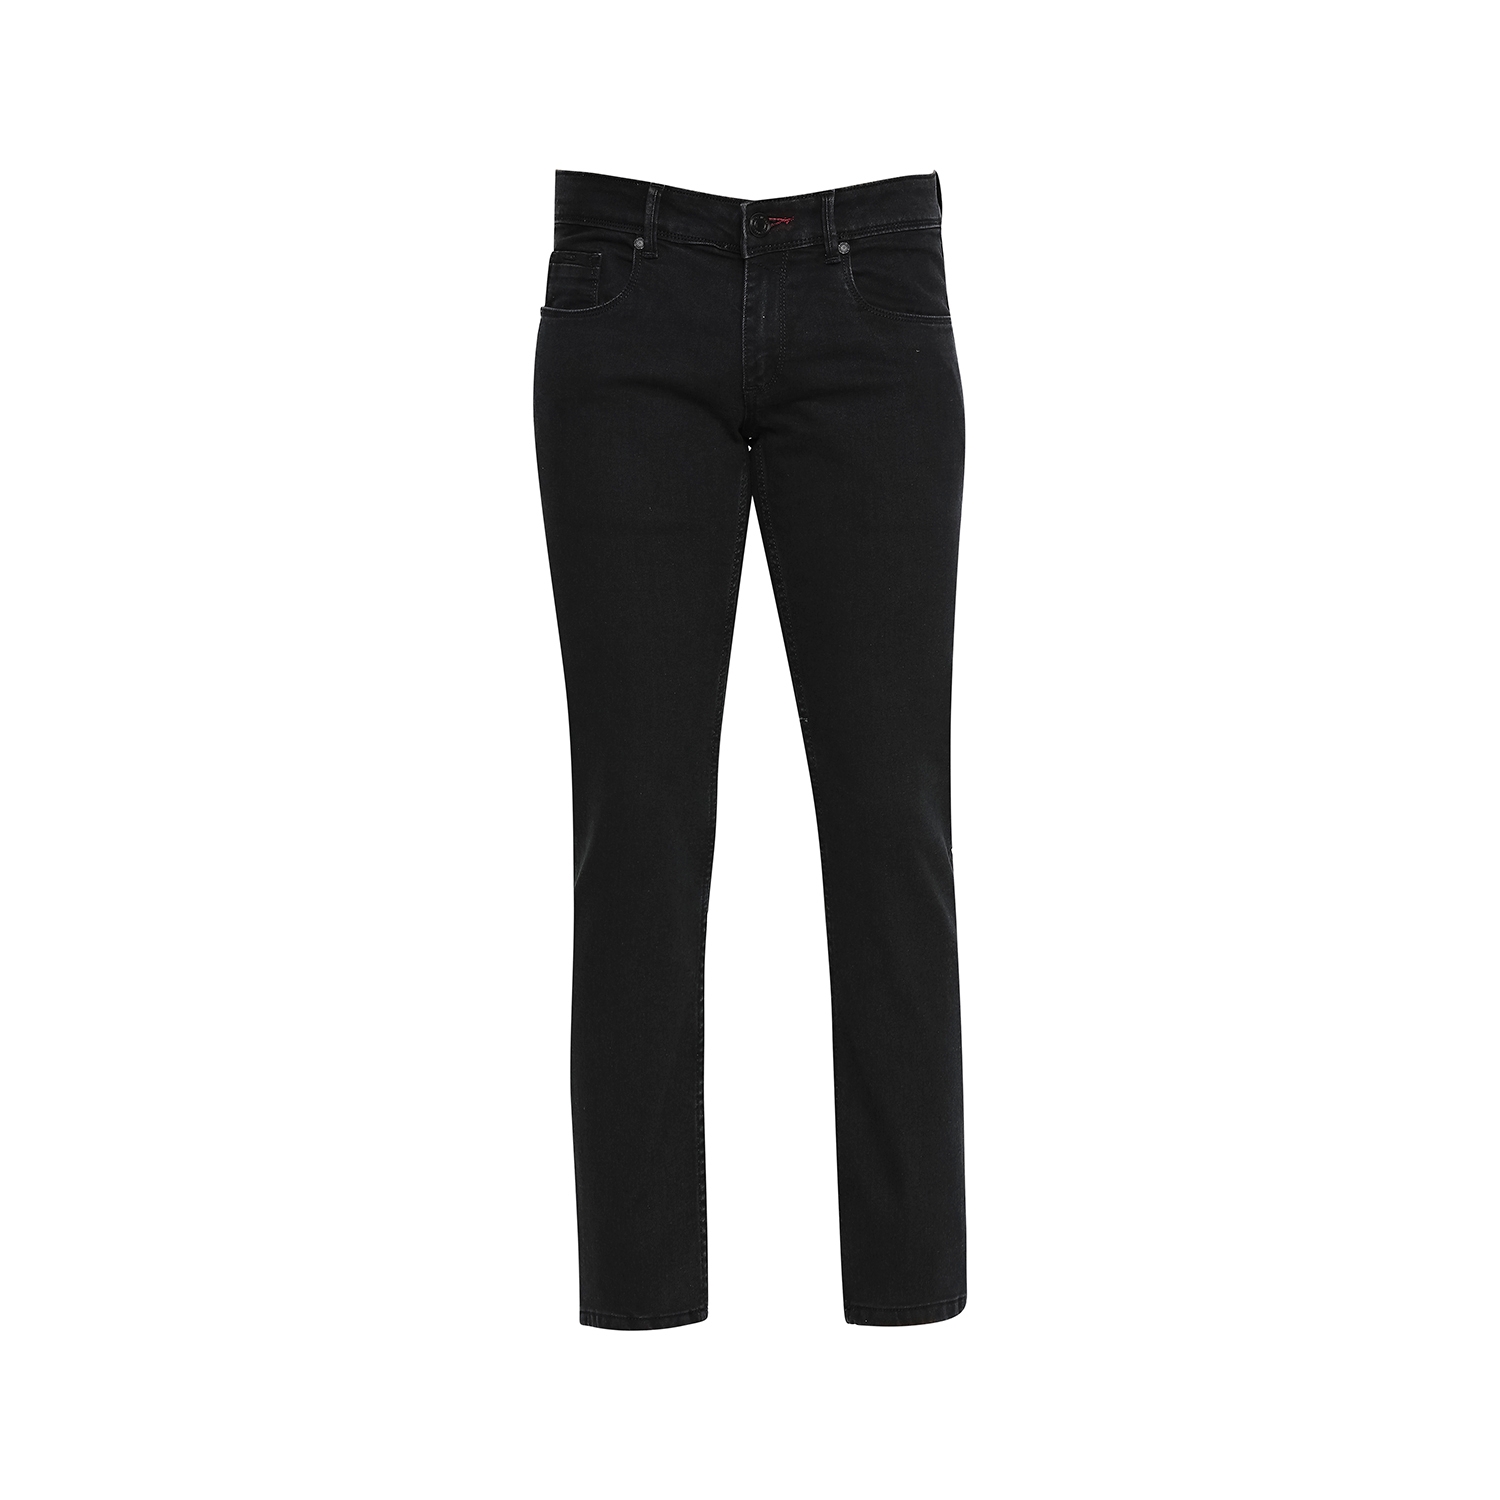 Basics | Men's Black Cotton Blend Solid Jeans 5